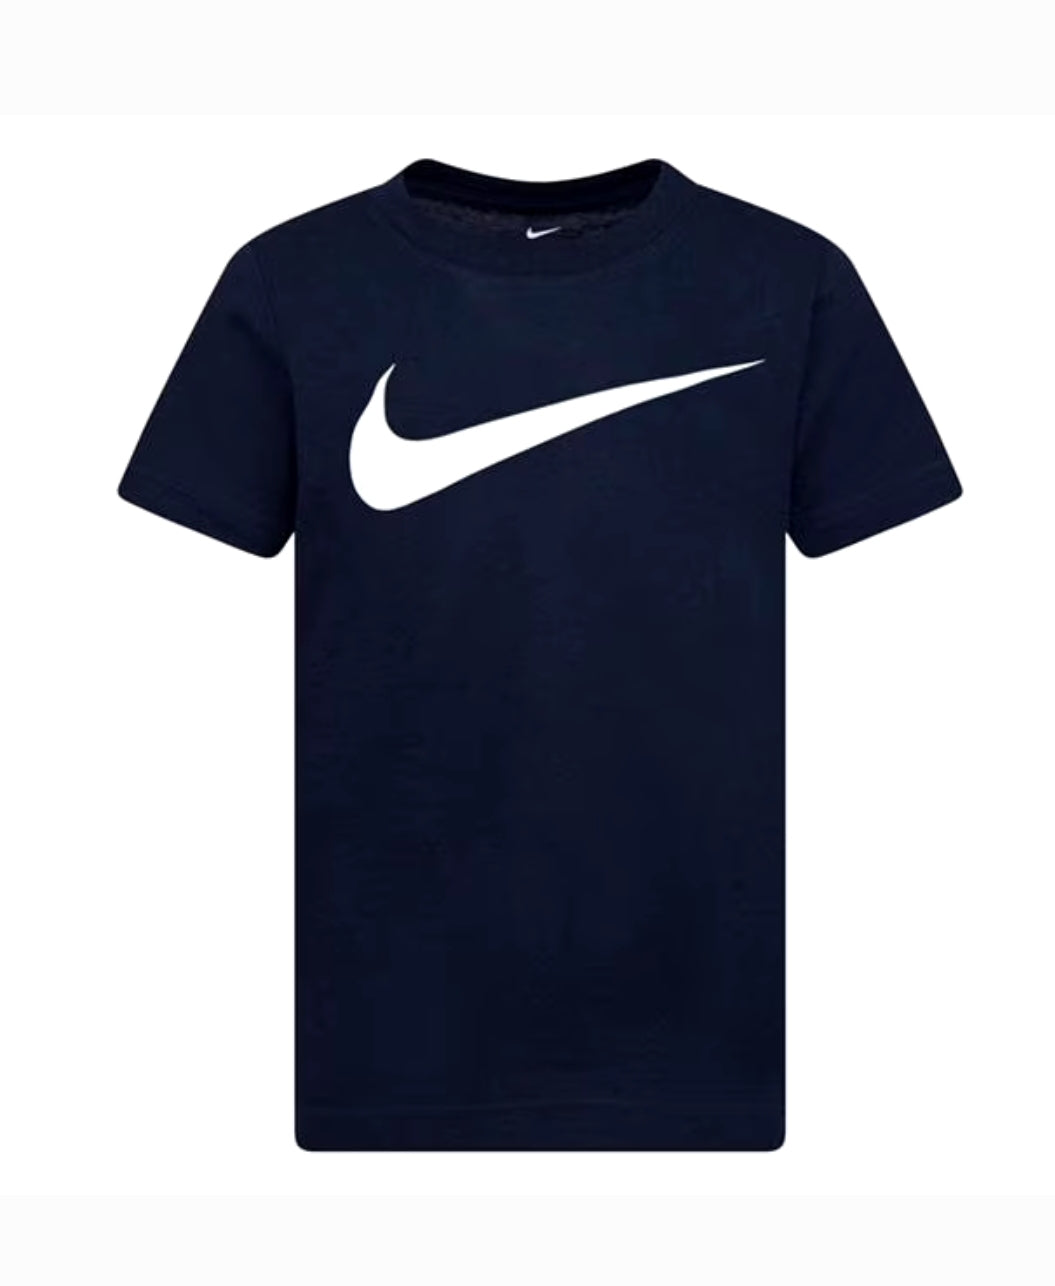 Camiseta Nike com logotipo swoosh obsidian/white infantil